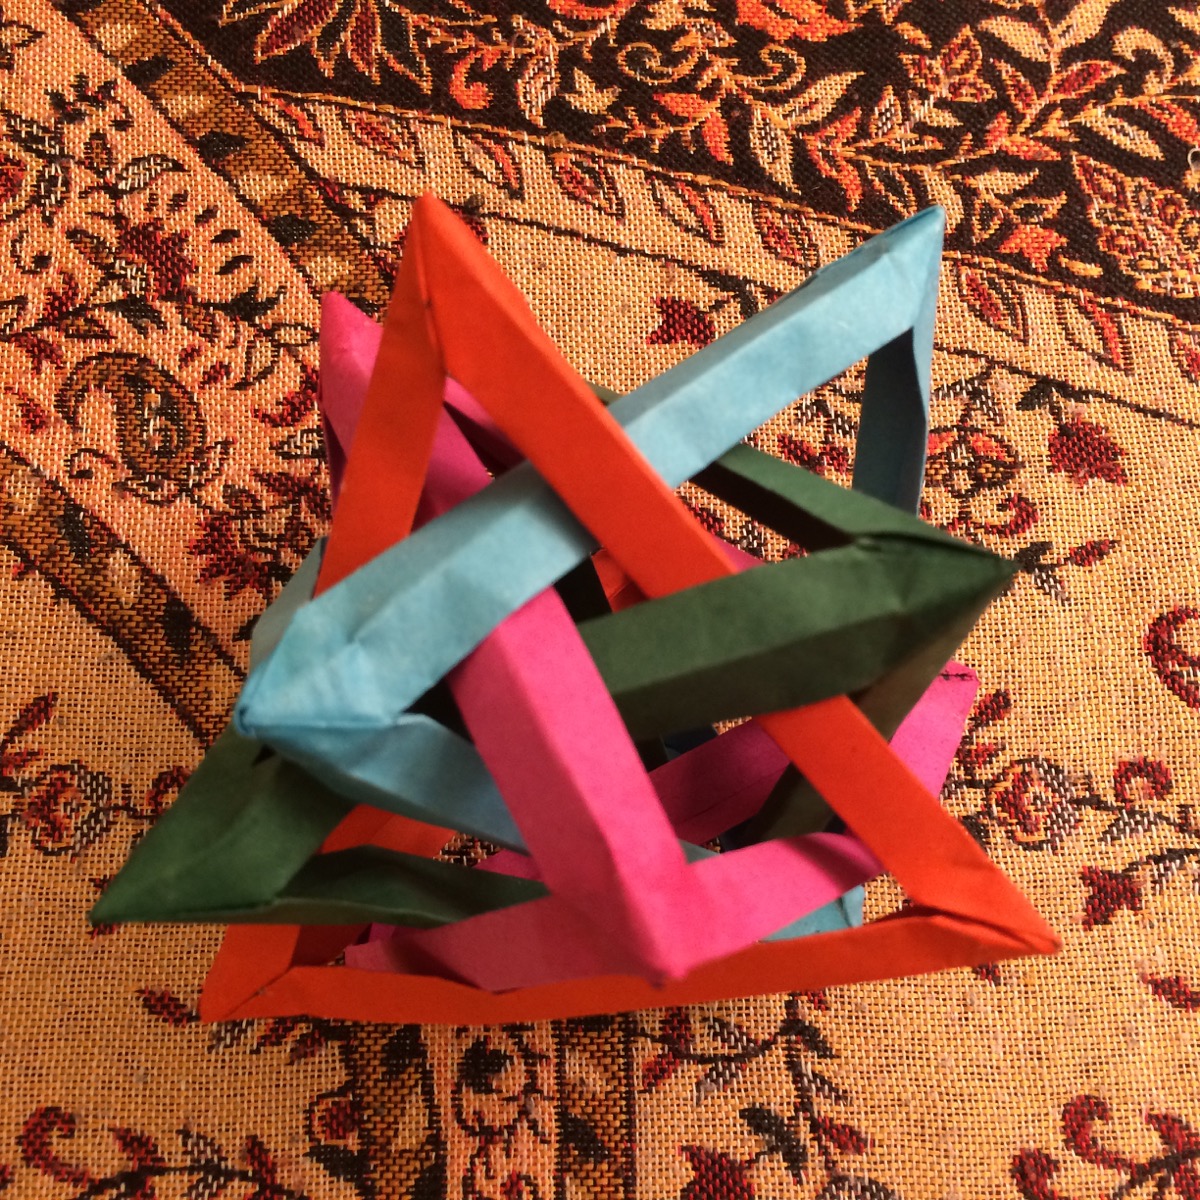 tetrahedron_2